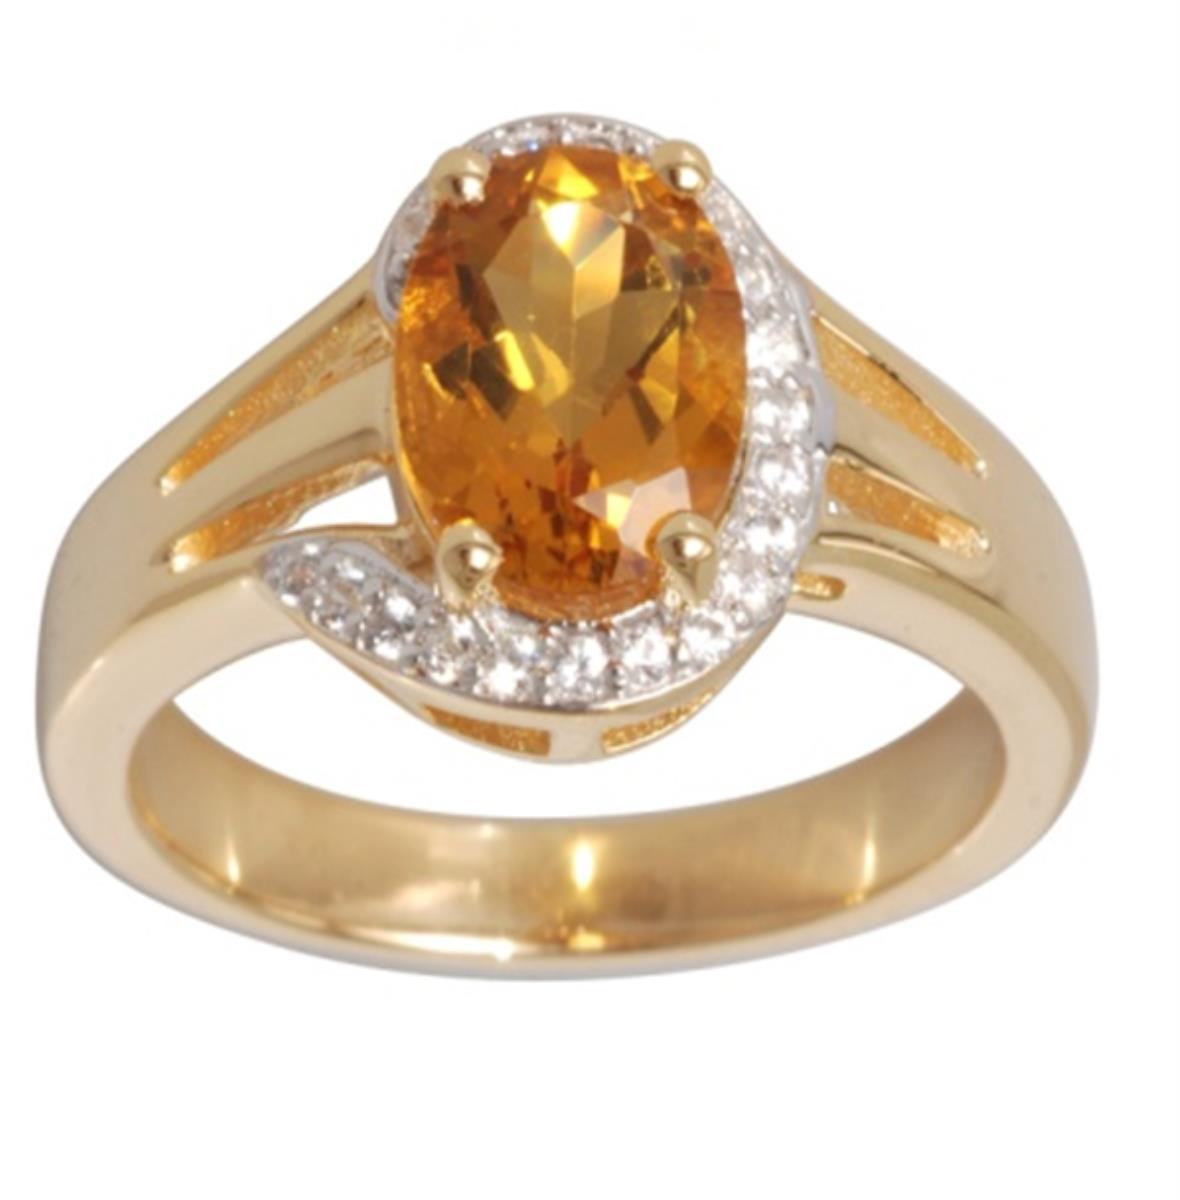 10K Yellow Gold 3-Strand 9x6mm Oval Cut Yellow Beryl & White Zircon Fashion Ring